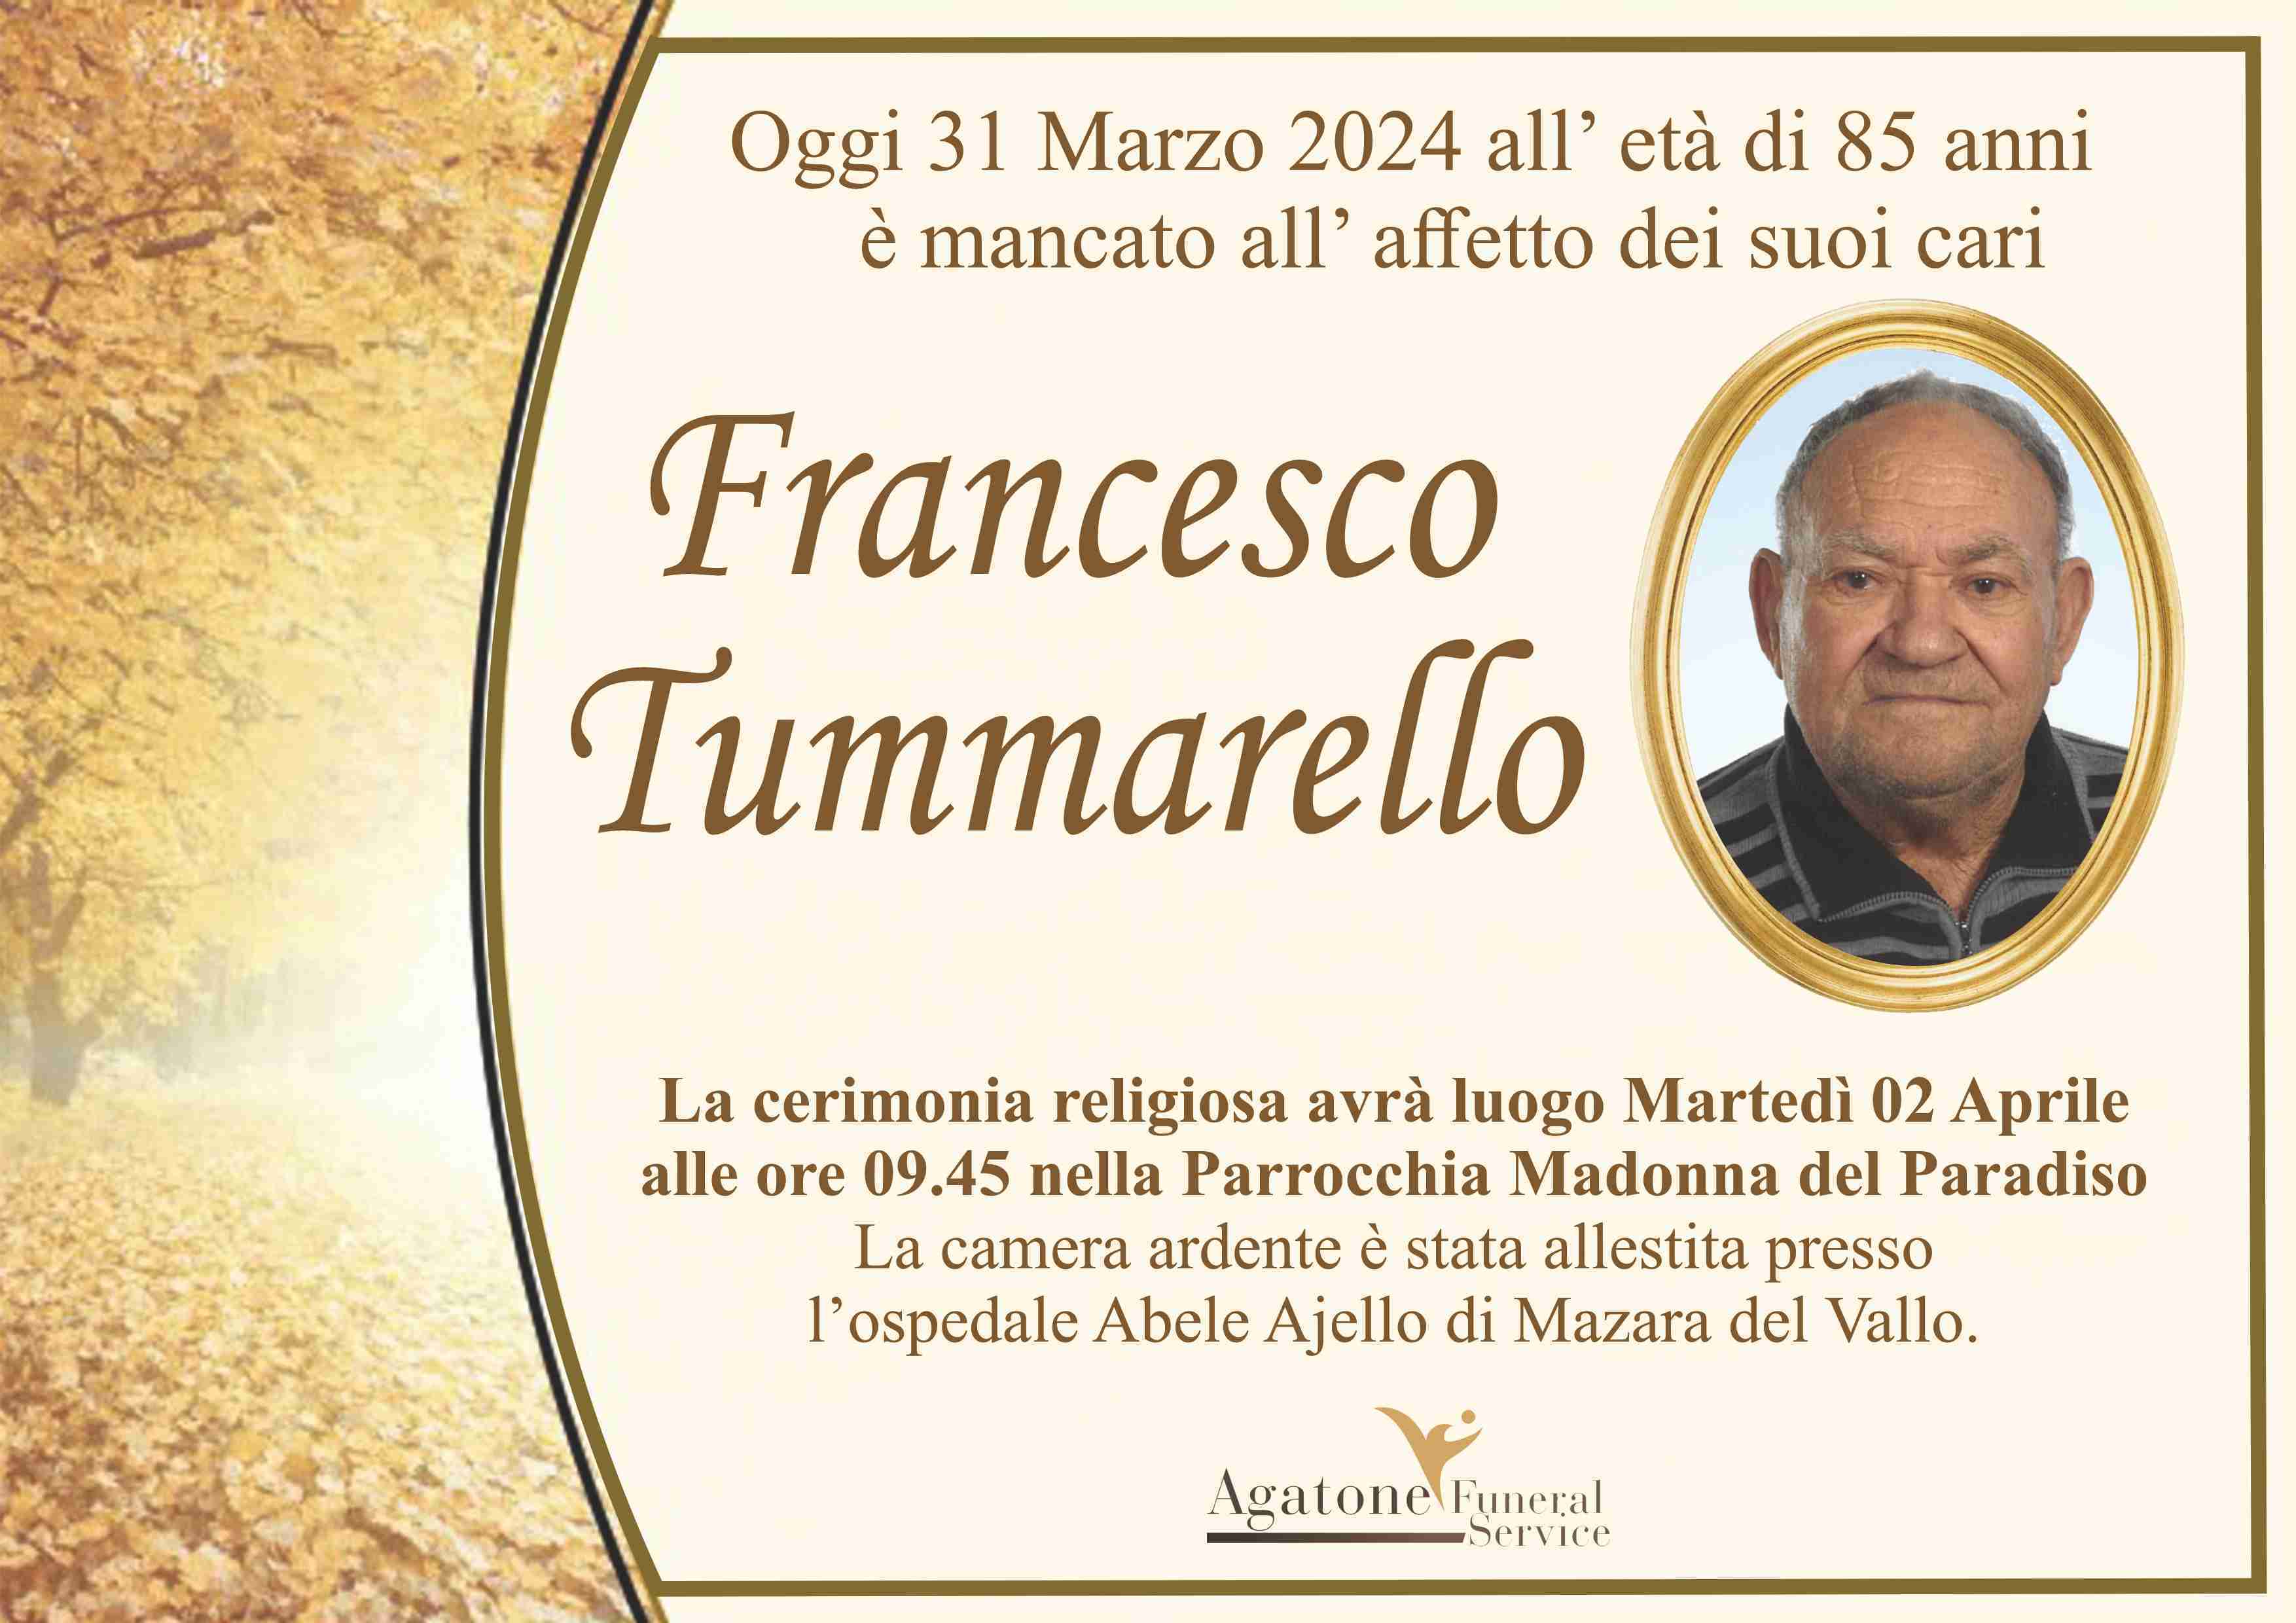 Francesco Tummarello